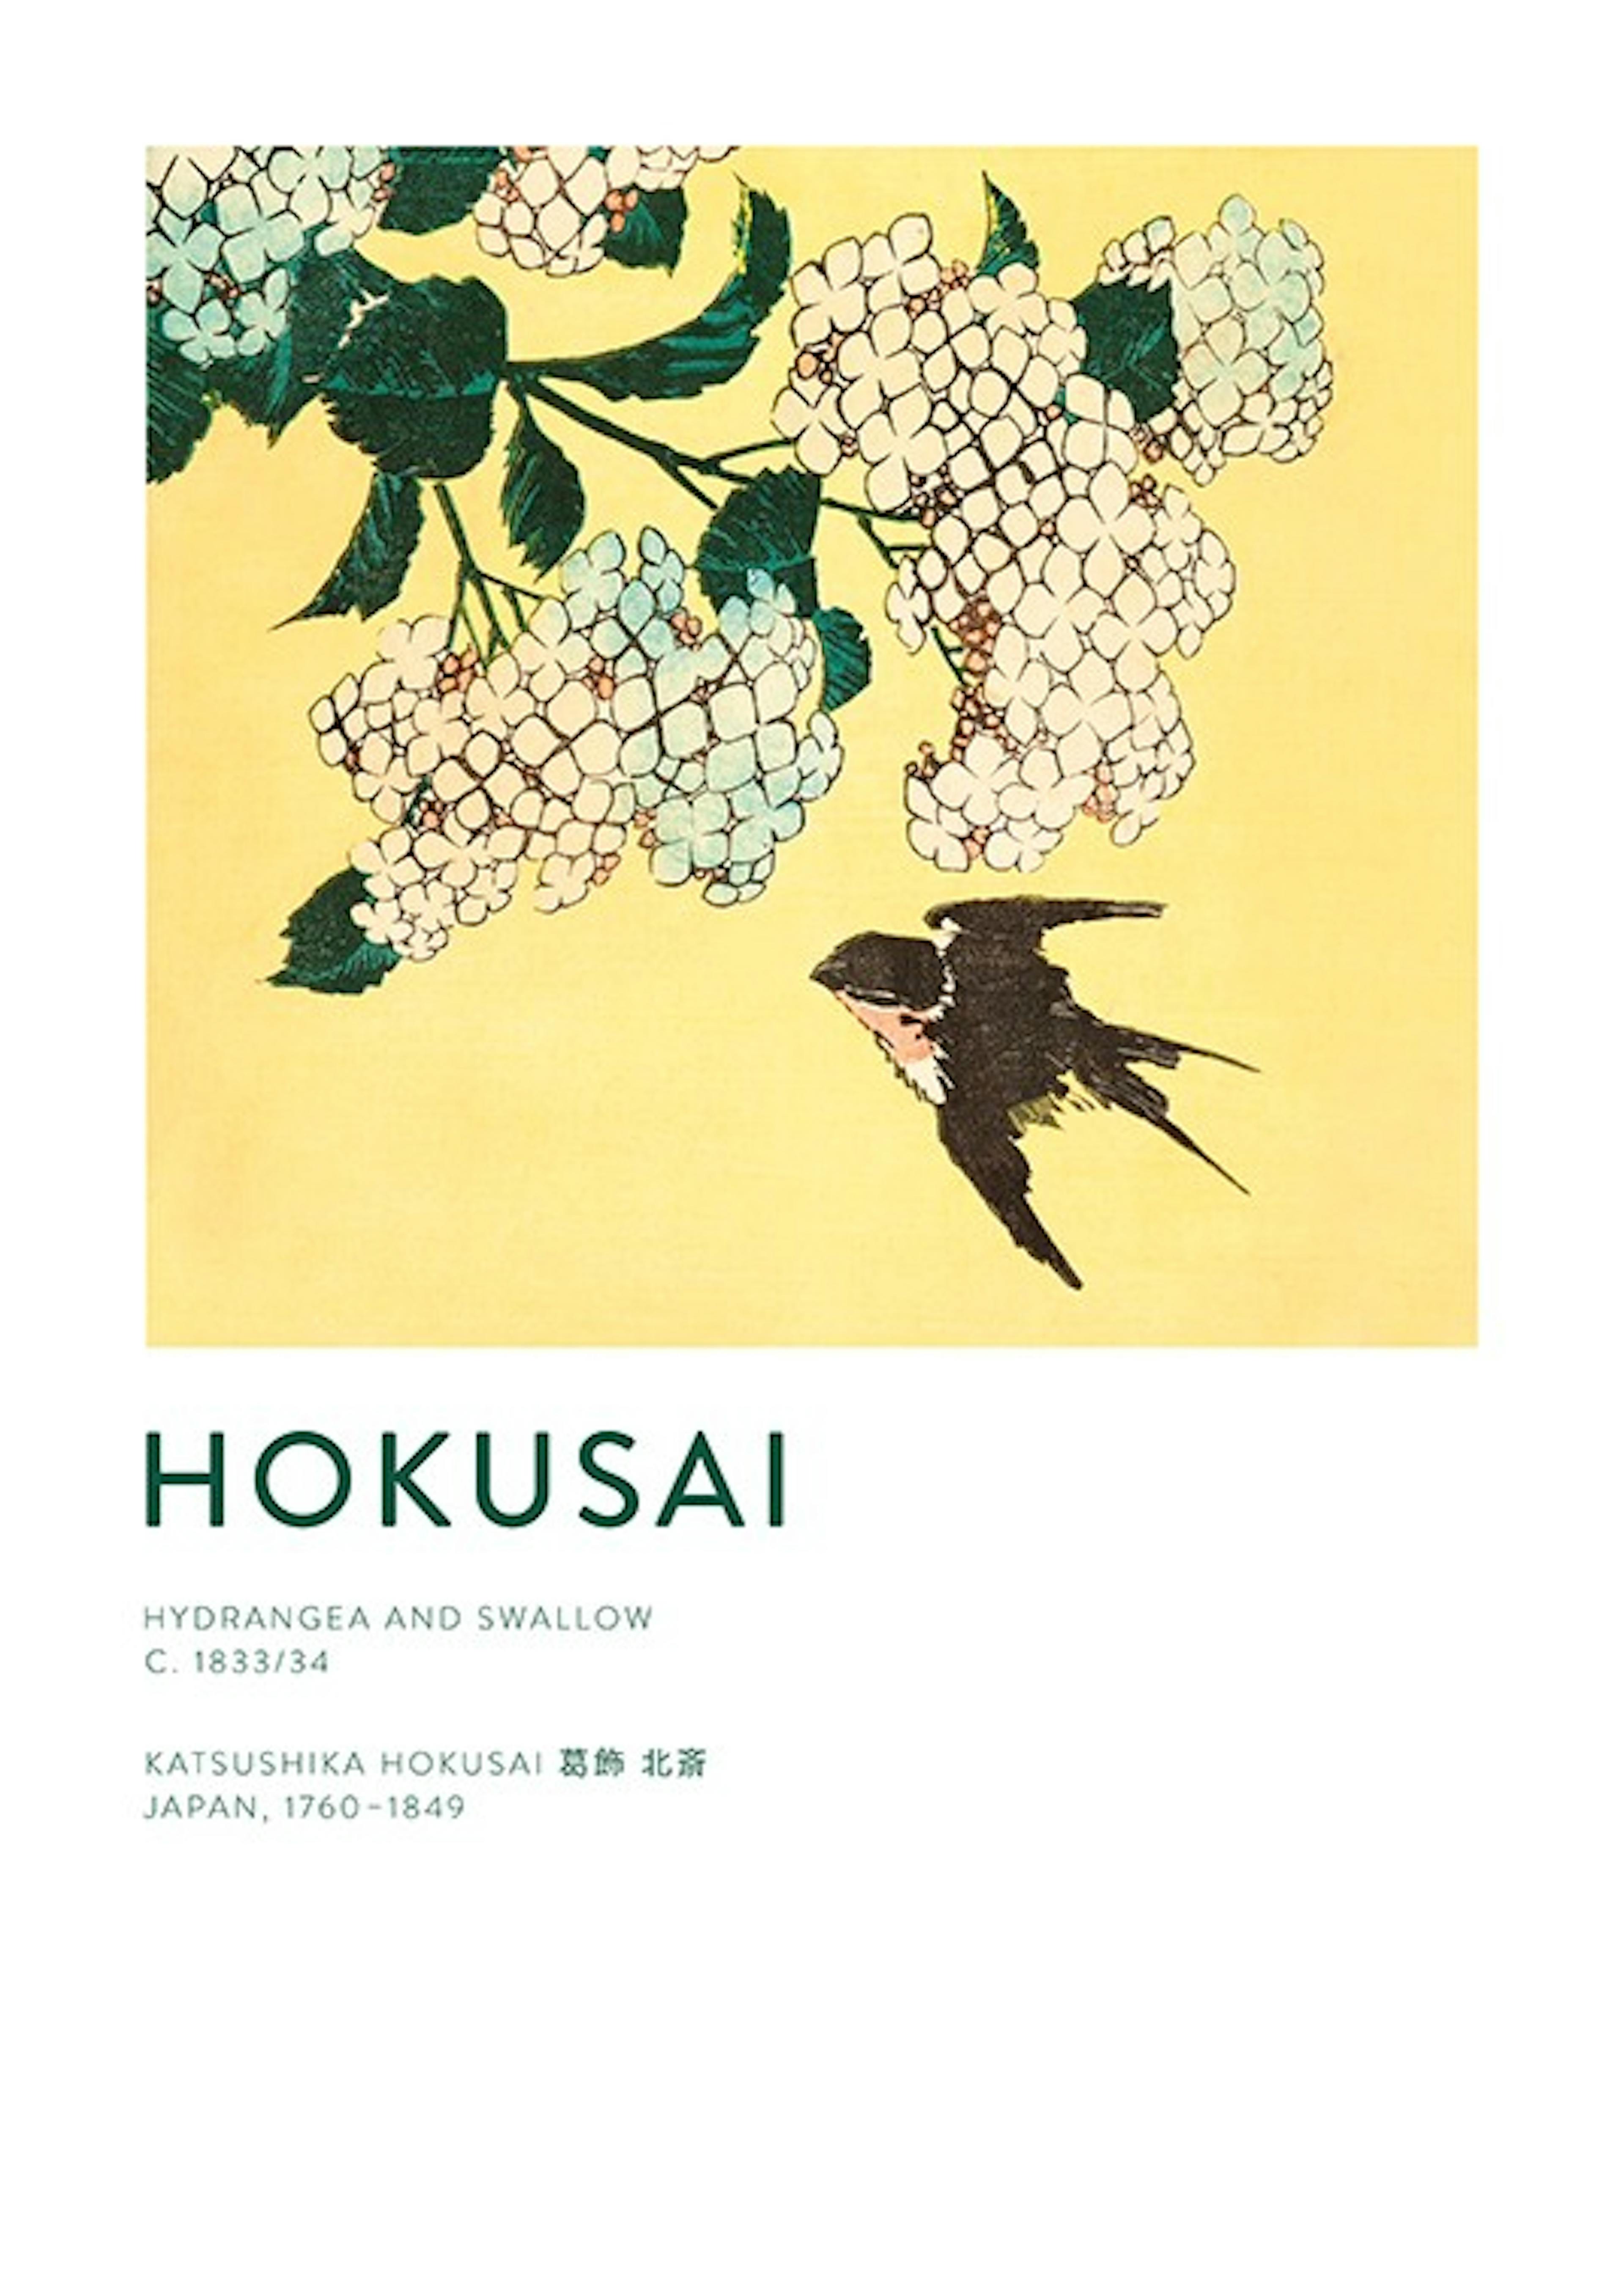 Hokusai - Hydrangea and Swallow Print